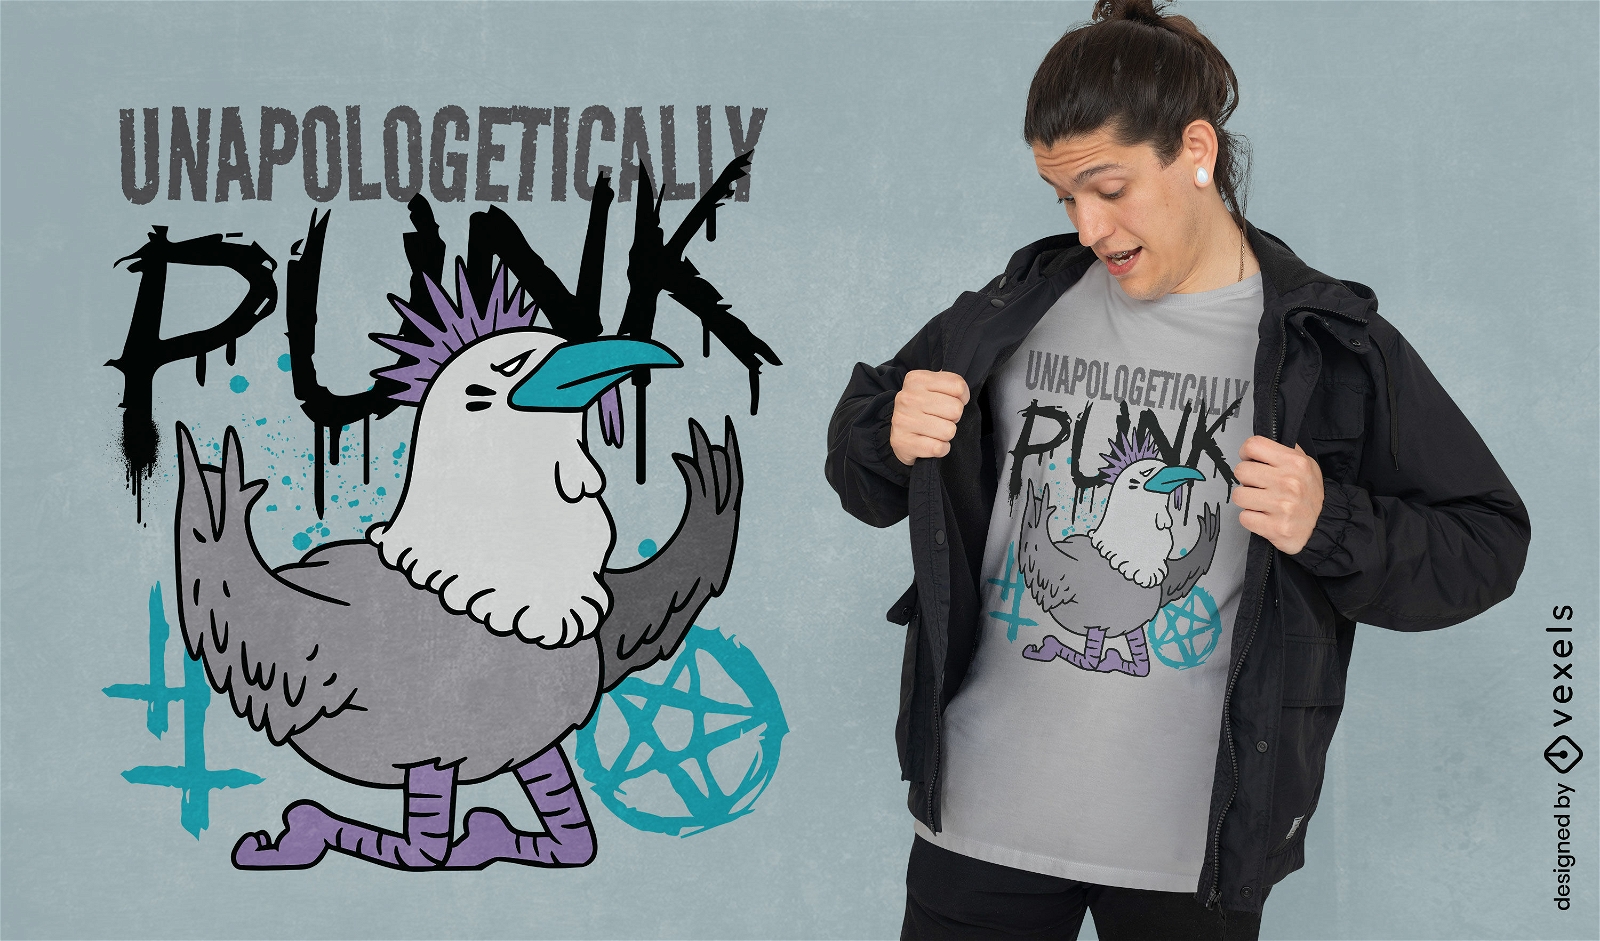 Punk pride edgy t-shirt design